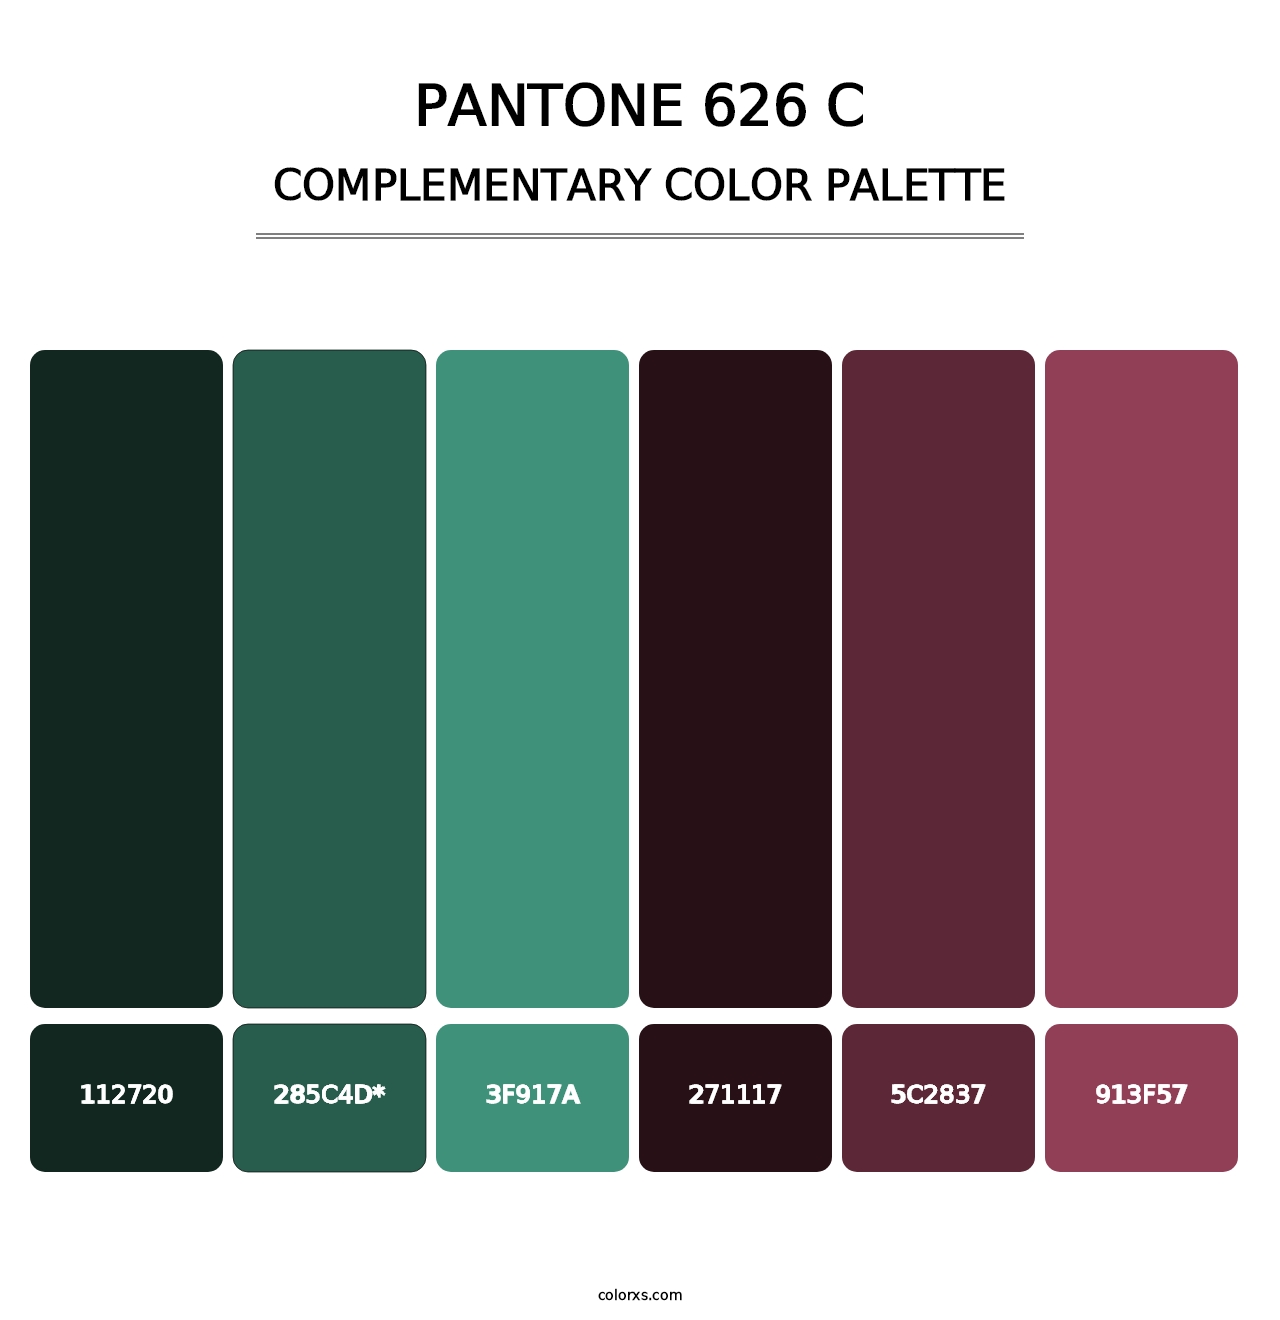 PANTONE 626 C - Complementary Color Palette